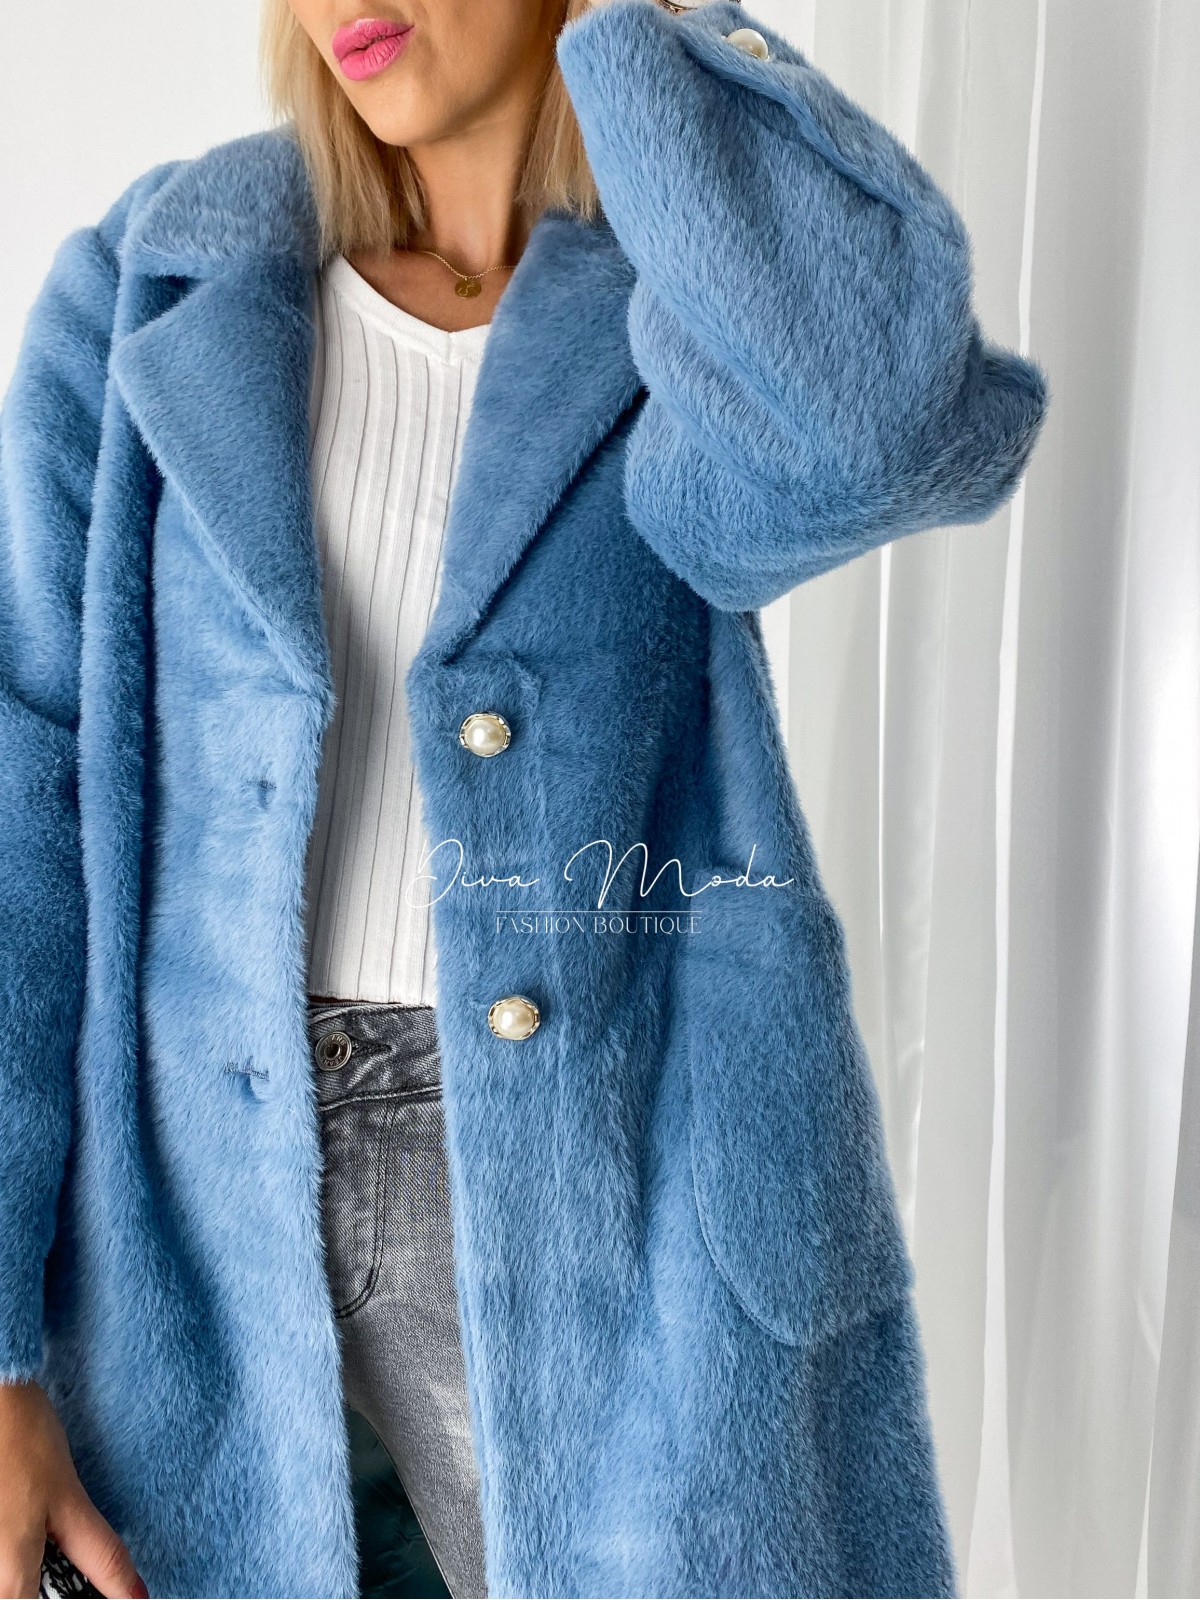 Chlpatý kabátik Perla modrý A 75